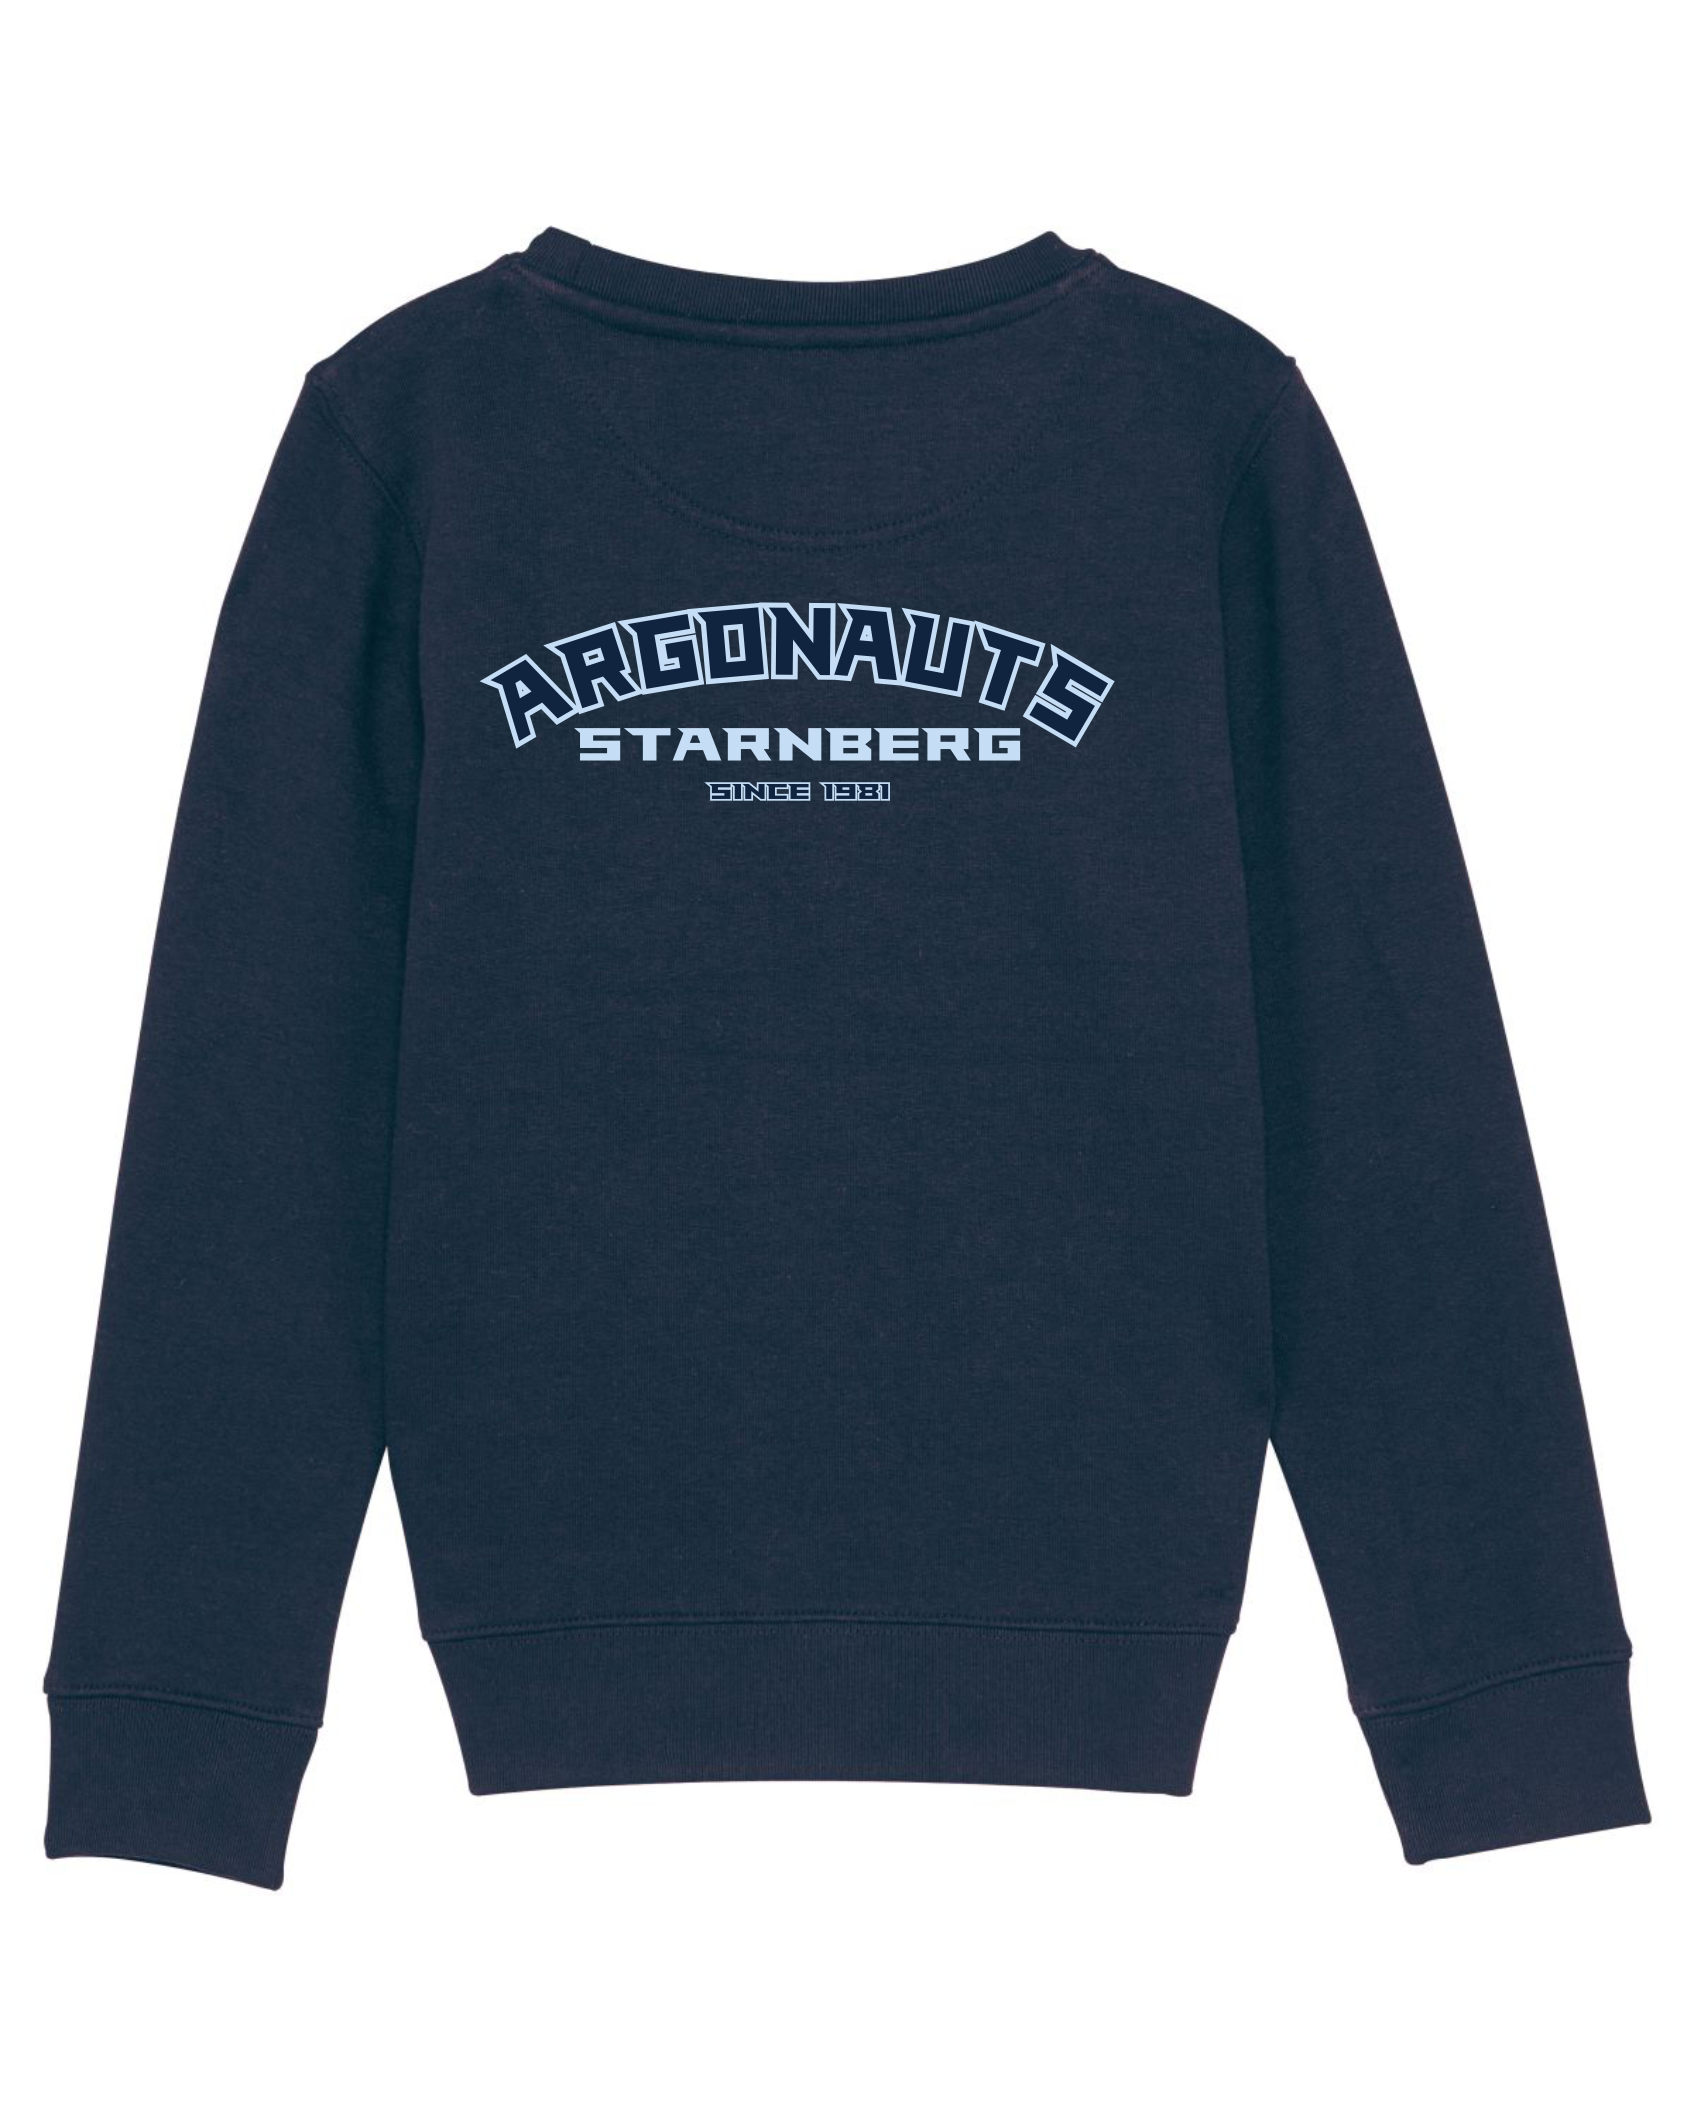 Starnberg Argonauts  Sweater Unisex  